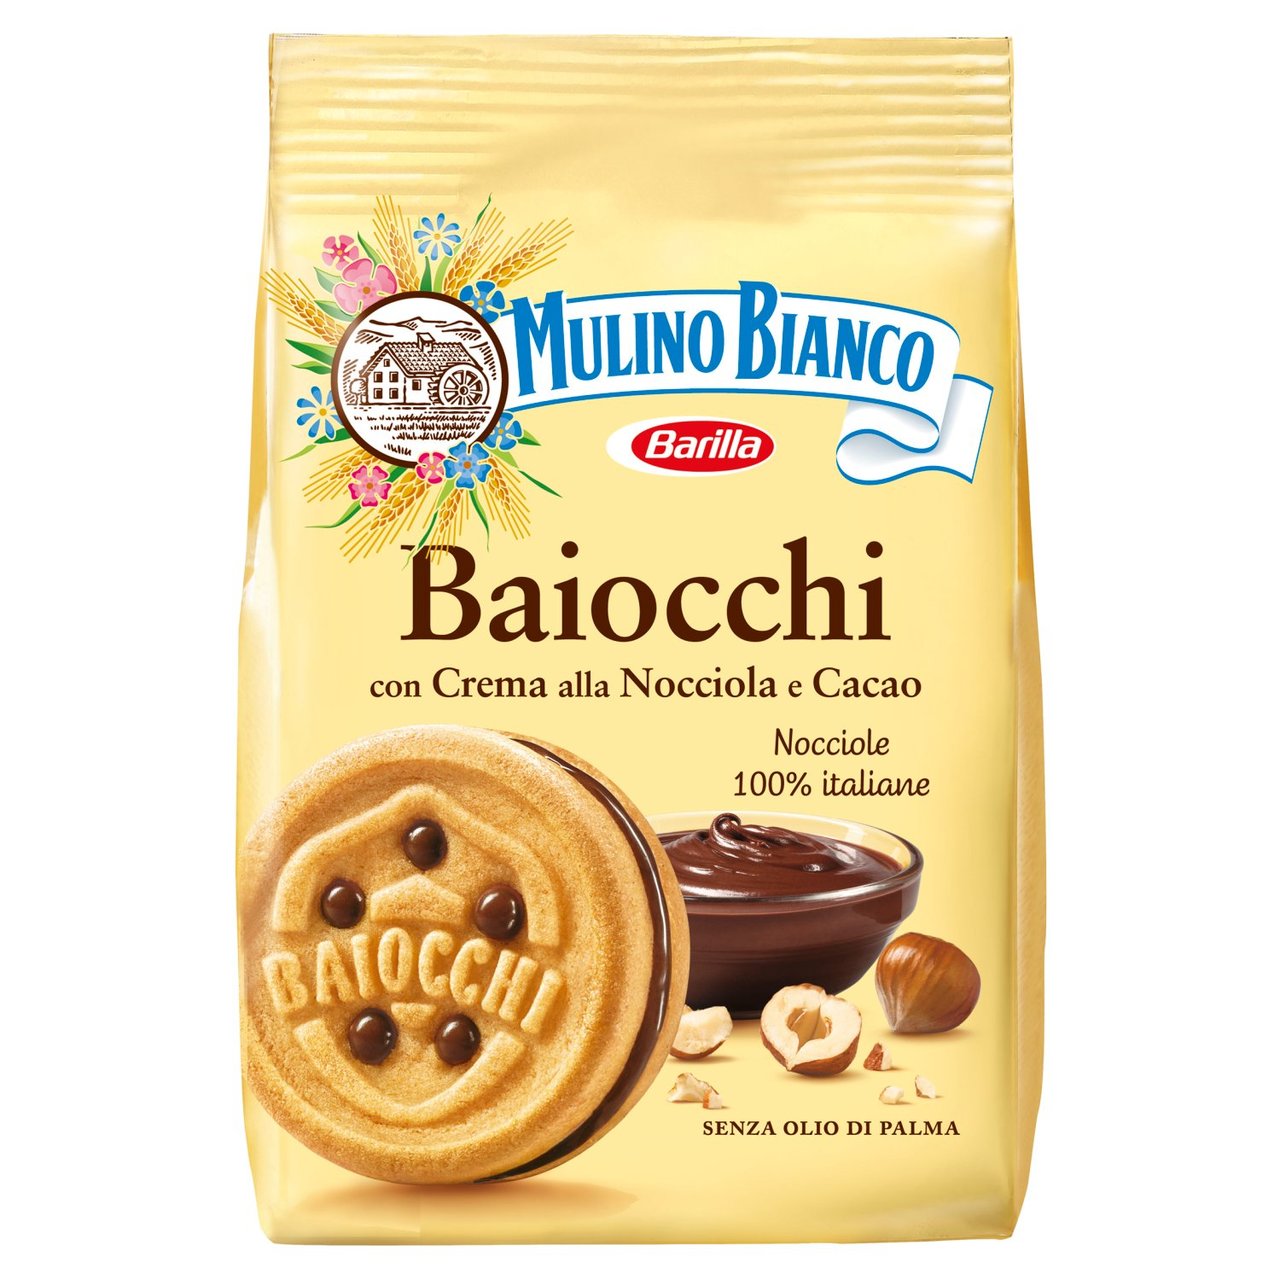 Biscuits Mulino Bianco Baiocchi 260g